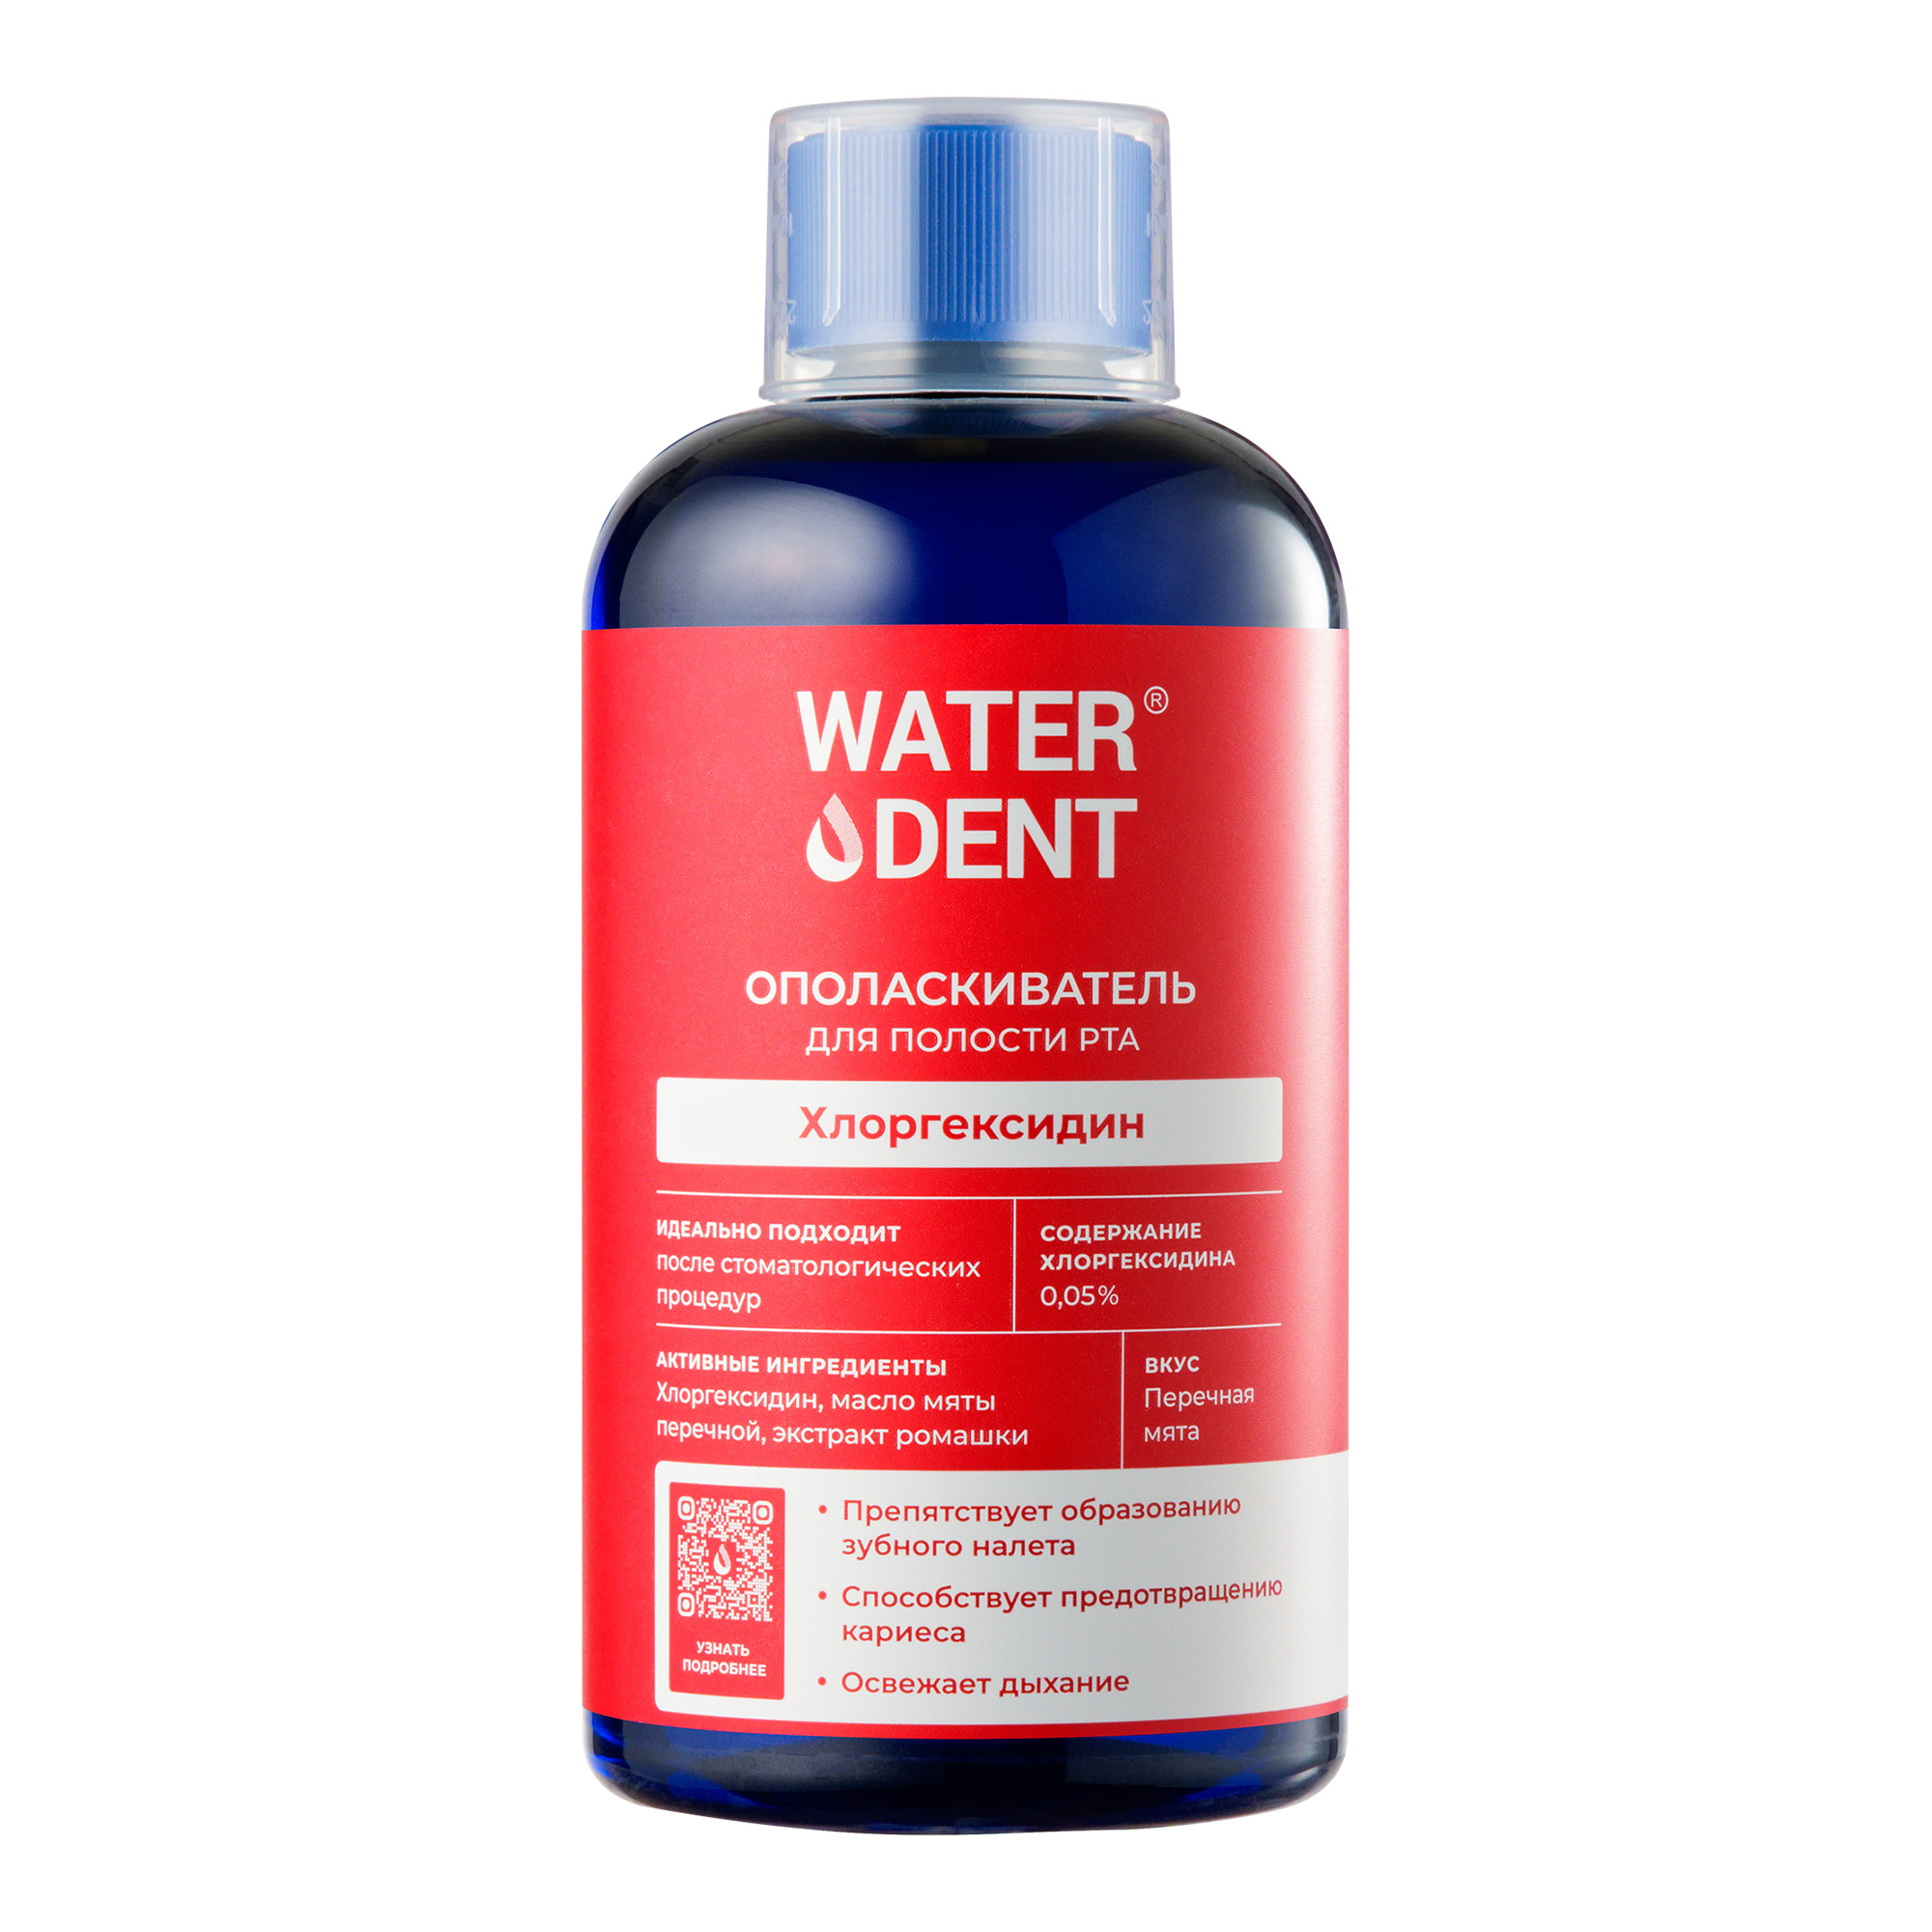 Waterdent, ополаскиватель для полости рта Хлоргексидин со вкусом мяты, 500 мл global white ополаскиватель для полости рта total protection 300 мл